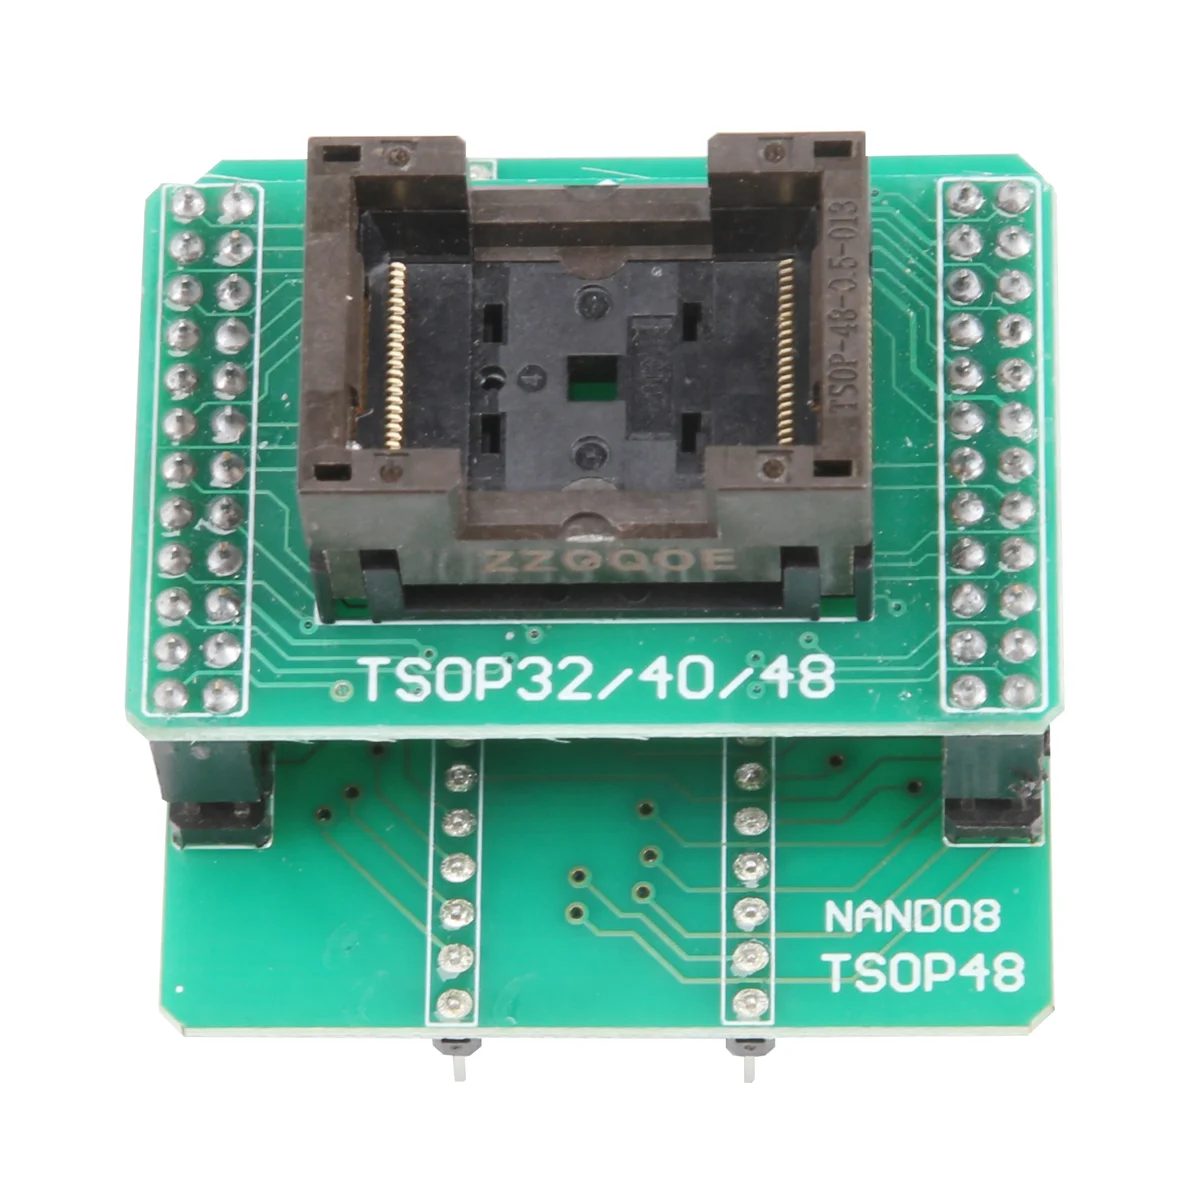 

2022 адаптеров TSOP 48 TSOP48 NAND адаптер только для программатора TL866II Plus для чипов NAND Flash